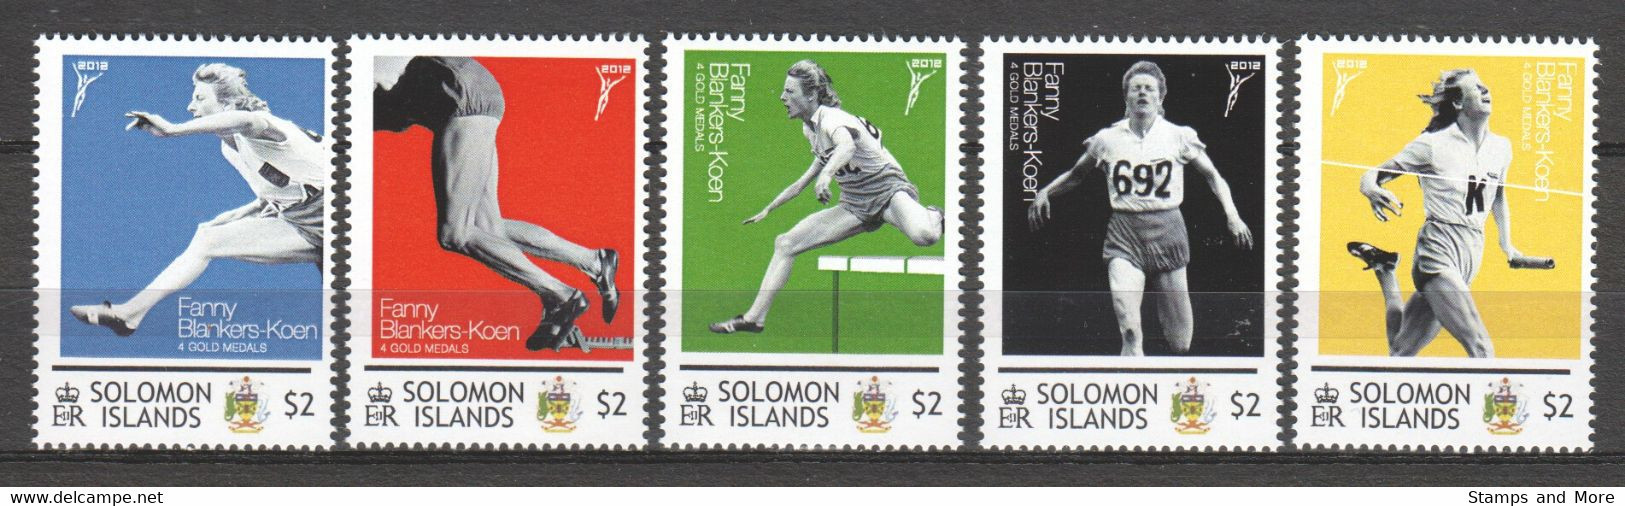 Solomon Islands 2012 MNH Set 2 SUMMER OLYMPICS LONDON 2012 - FANNY BLANKERS-KOEN - Sommer 2012: London